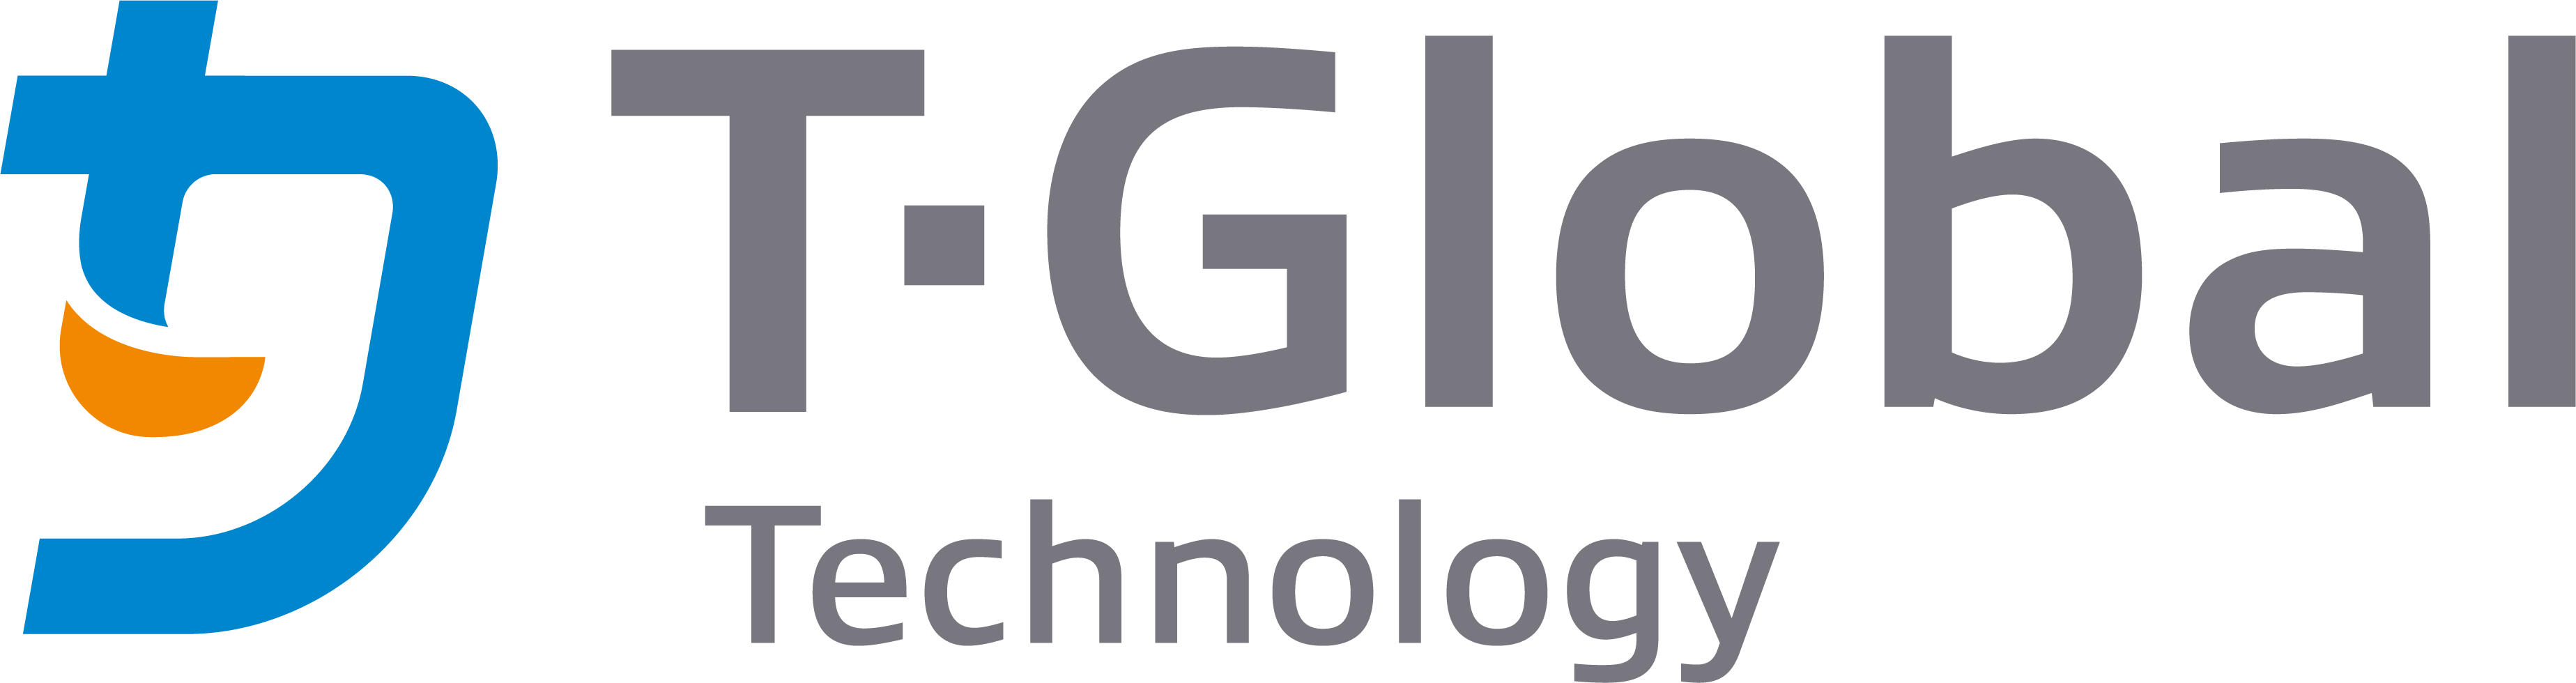 t-Global Technology LOGO